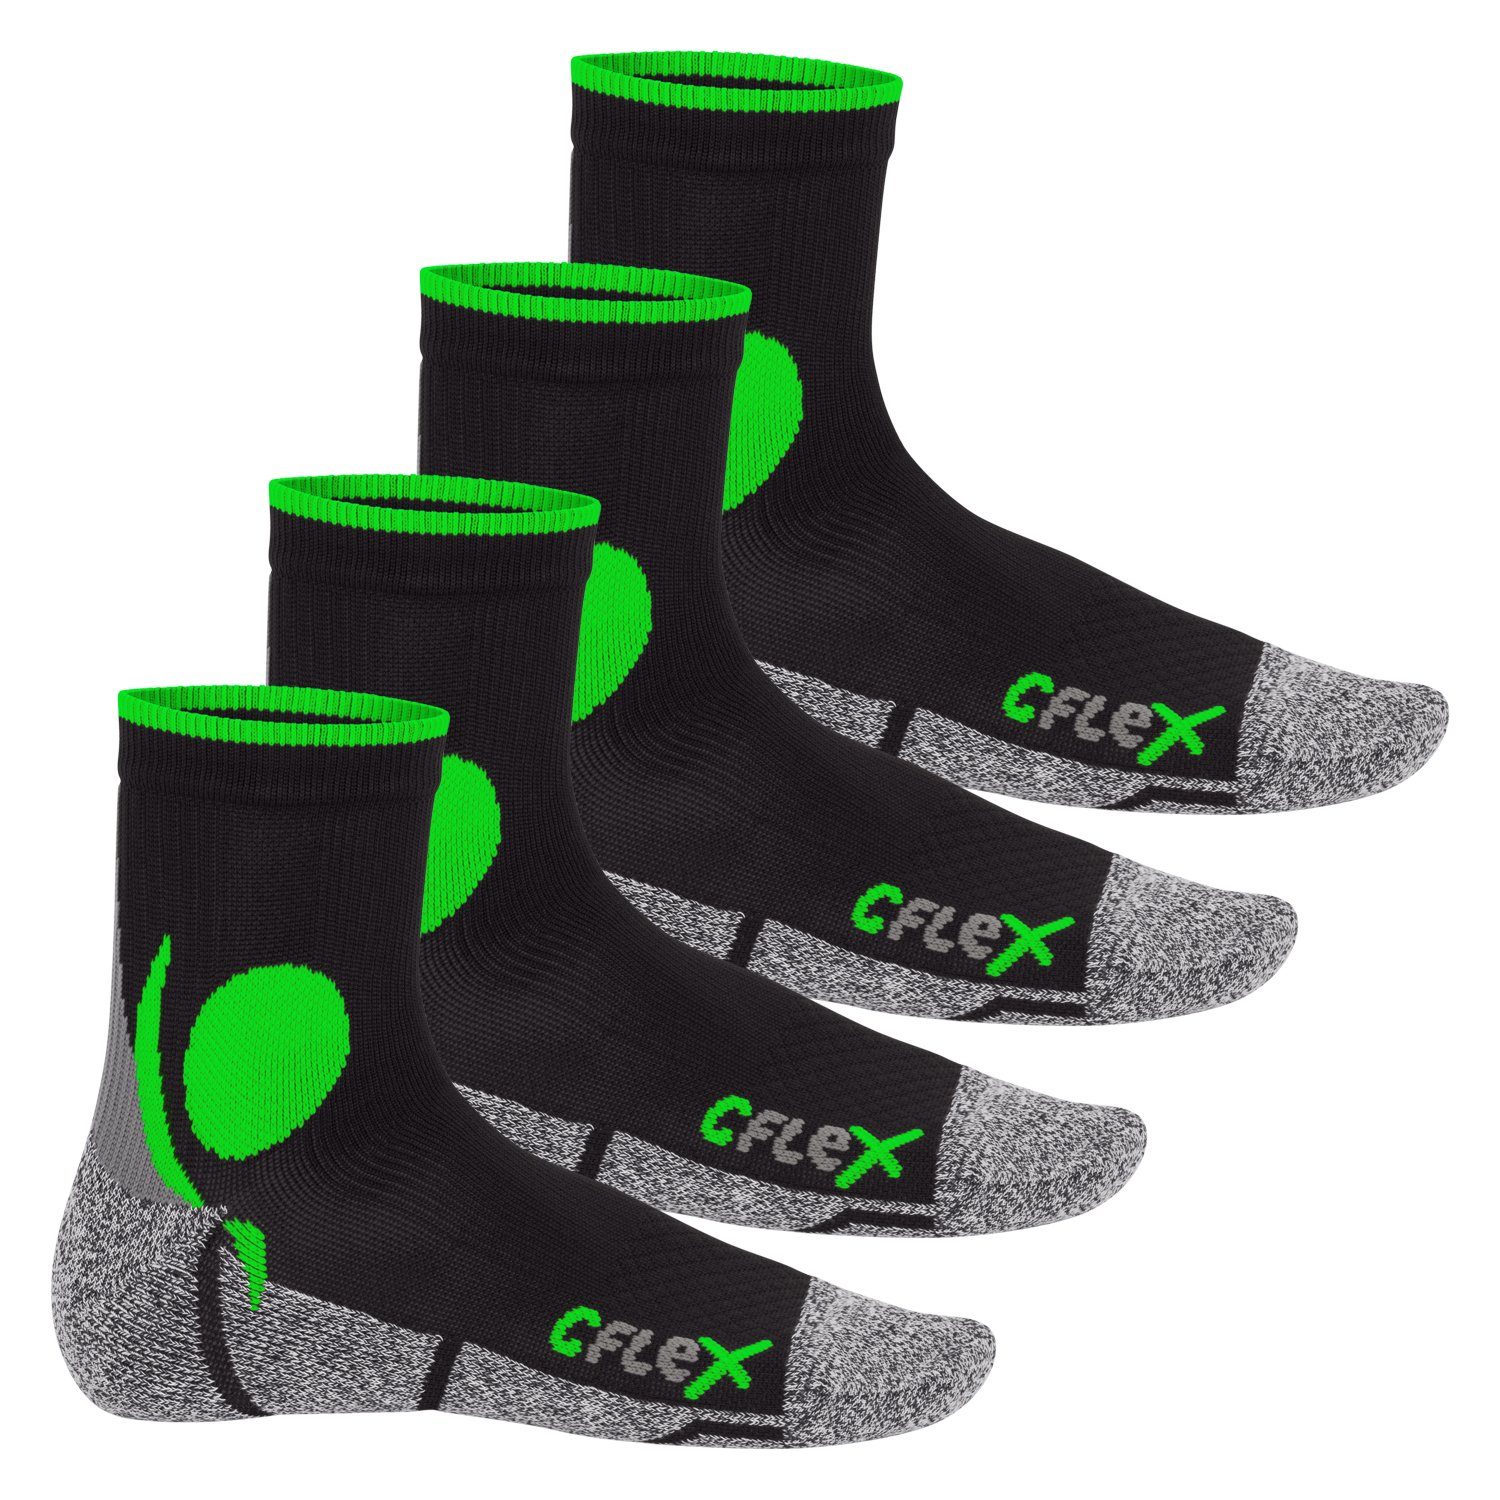 CFLEX Sportsocken Damen und Herren Running Funktions-Socken (4 Paar) Laufsocken Schwarz/Grün | Sportsocken